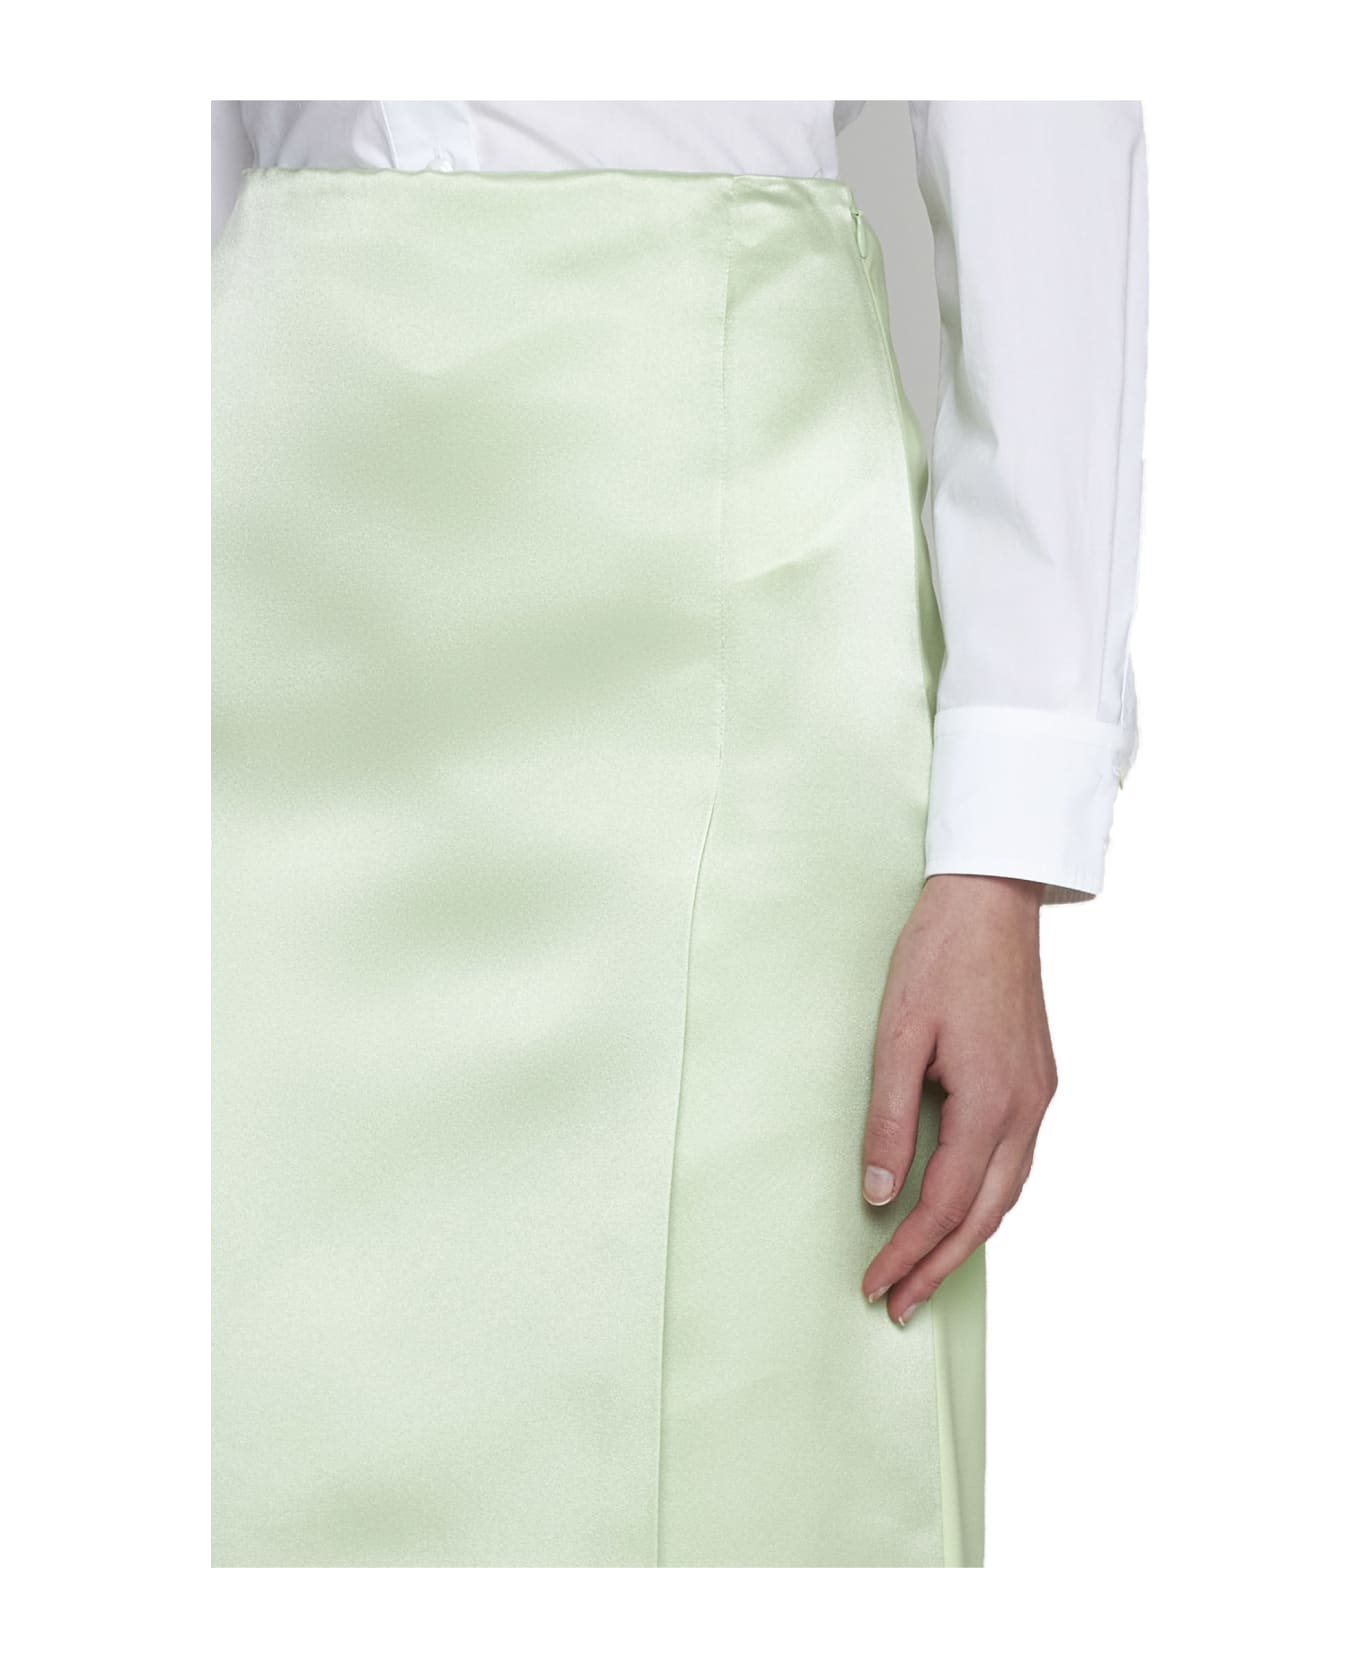 Tory Burch Satin Wrap Skirt - green スカート